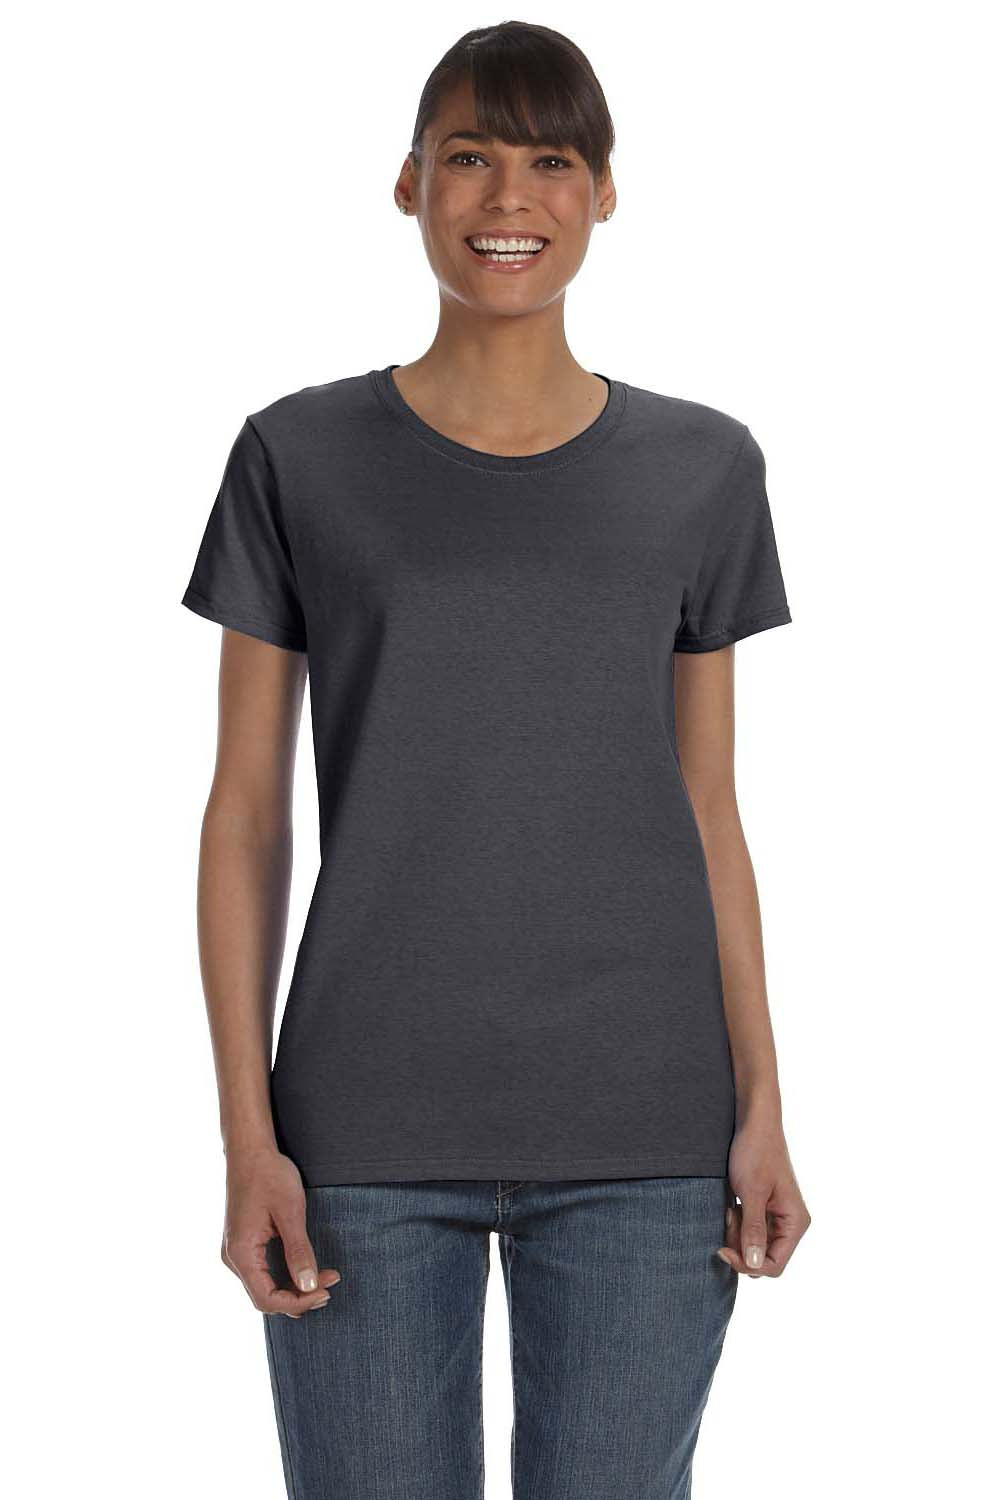 Gildan G500L Womens Short Sleeve Crewneck T-Shirt Charcoal Grey Front